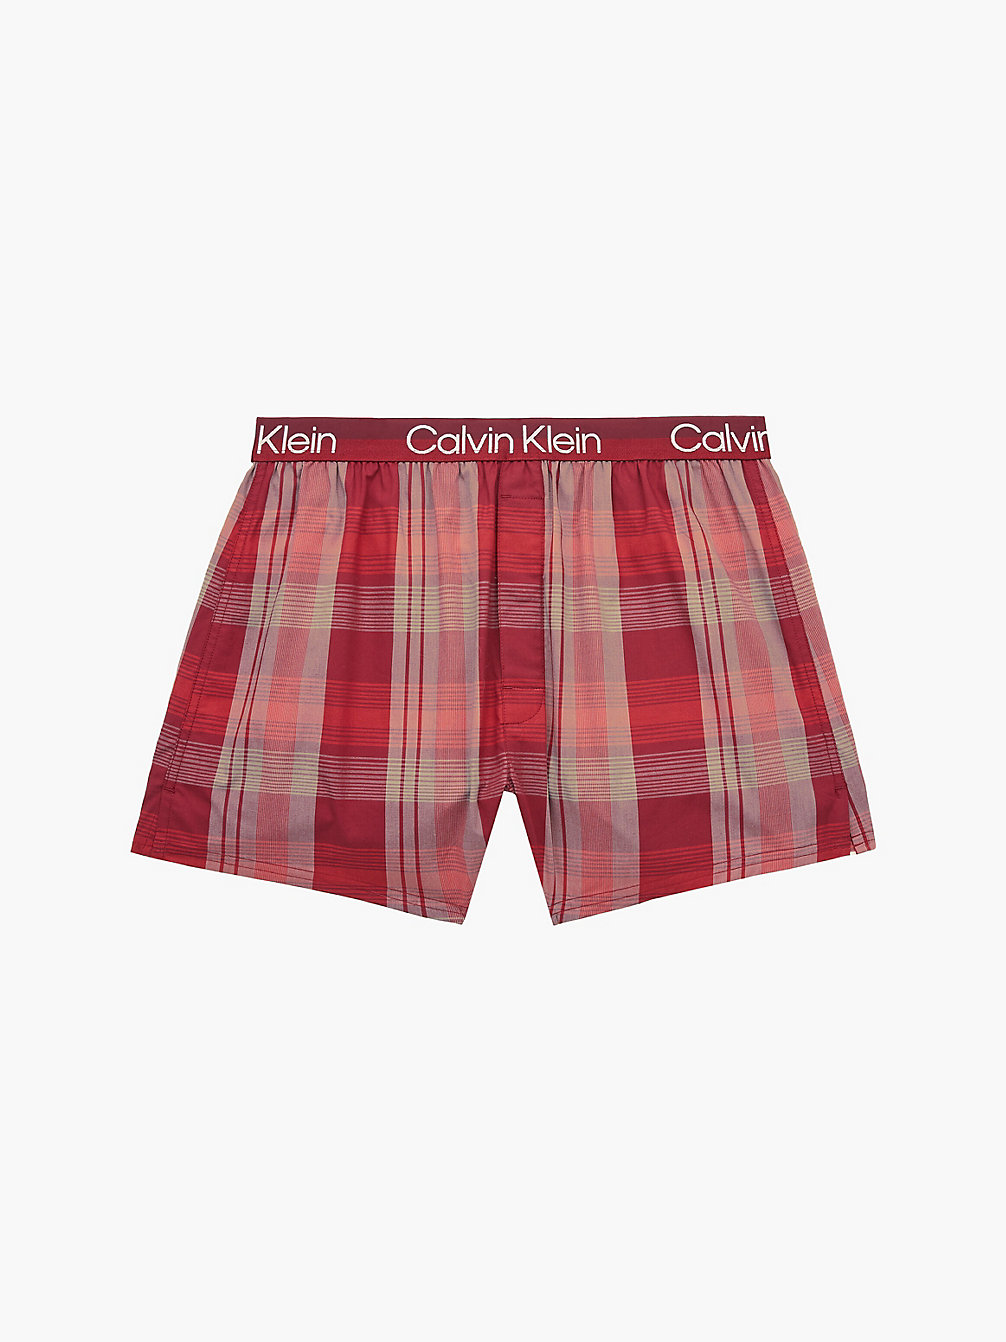 INFORM SHADOW PLAID_RED CARPET Slim Fit Boxers - Modern Structure undefined men Calvin Klein